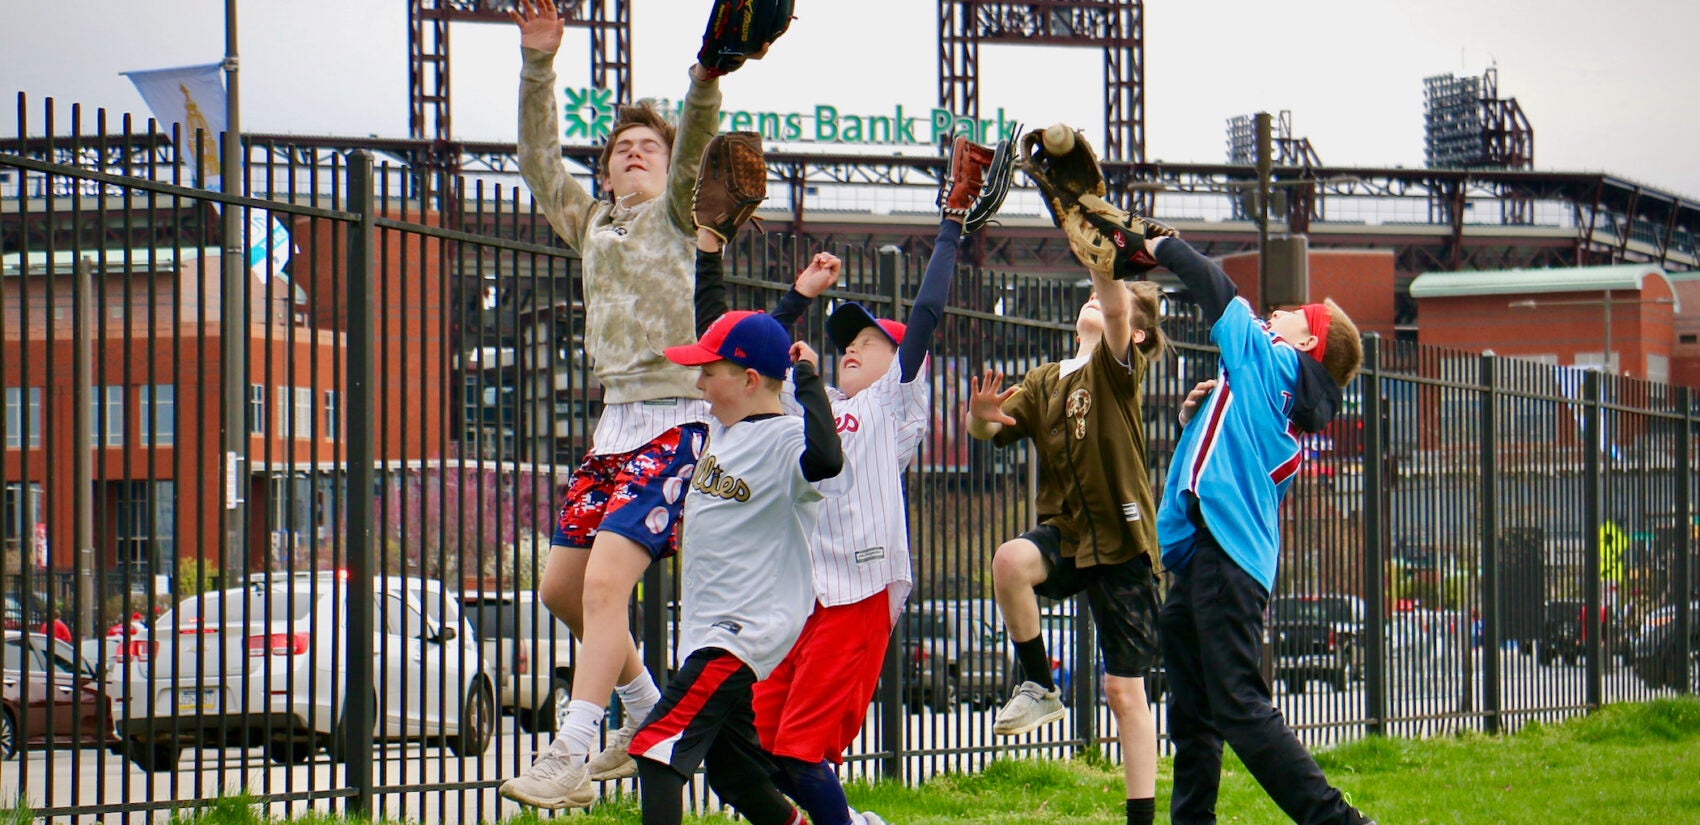 Children playing catch outside of the baseball stadium